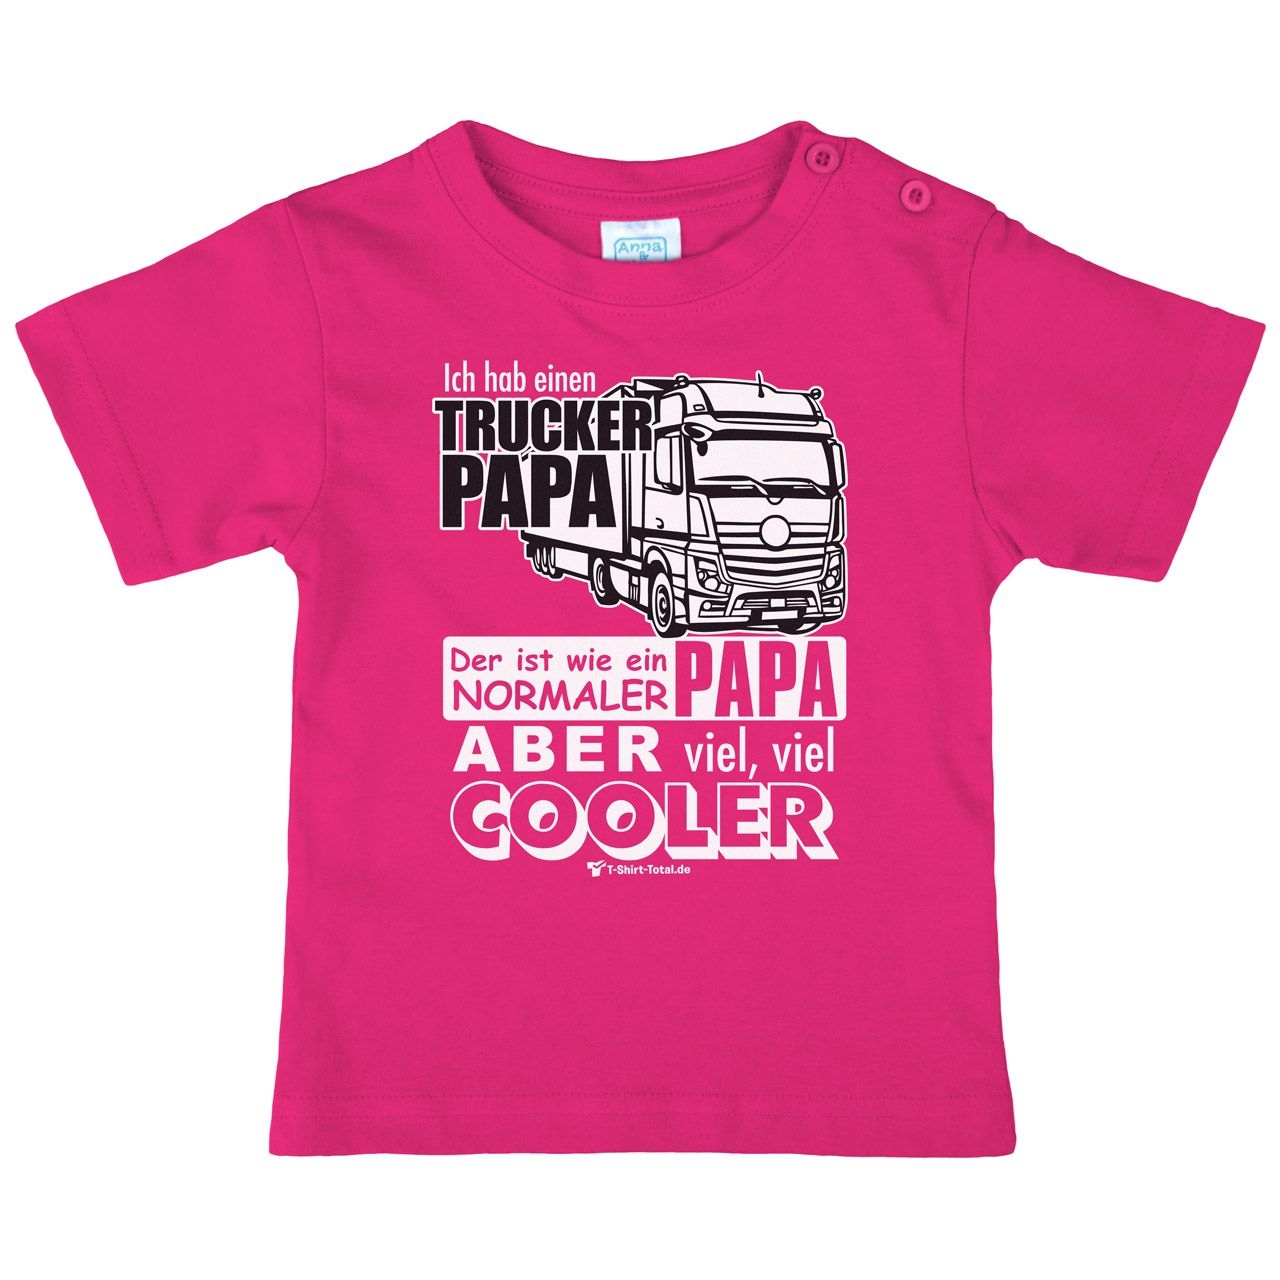 Trucker Papa Kinder T-Shirt pink 68 / 74